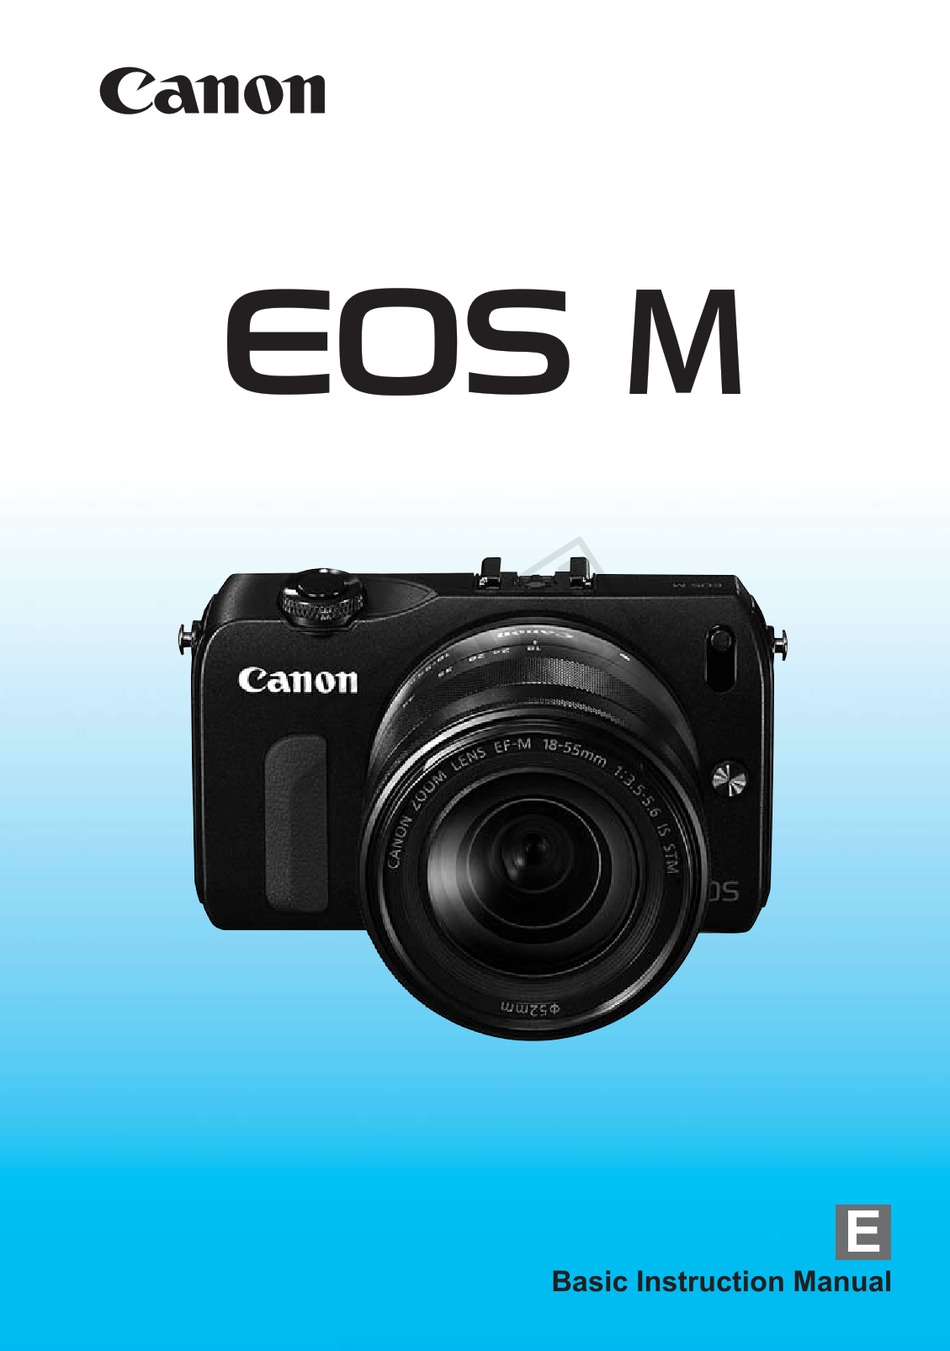 CANON EOS M EF-M 22MM STM KIT INSTRUCTION MANUAL Pdf Download | ManualsLib